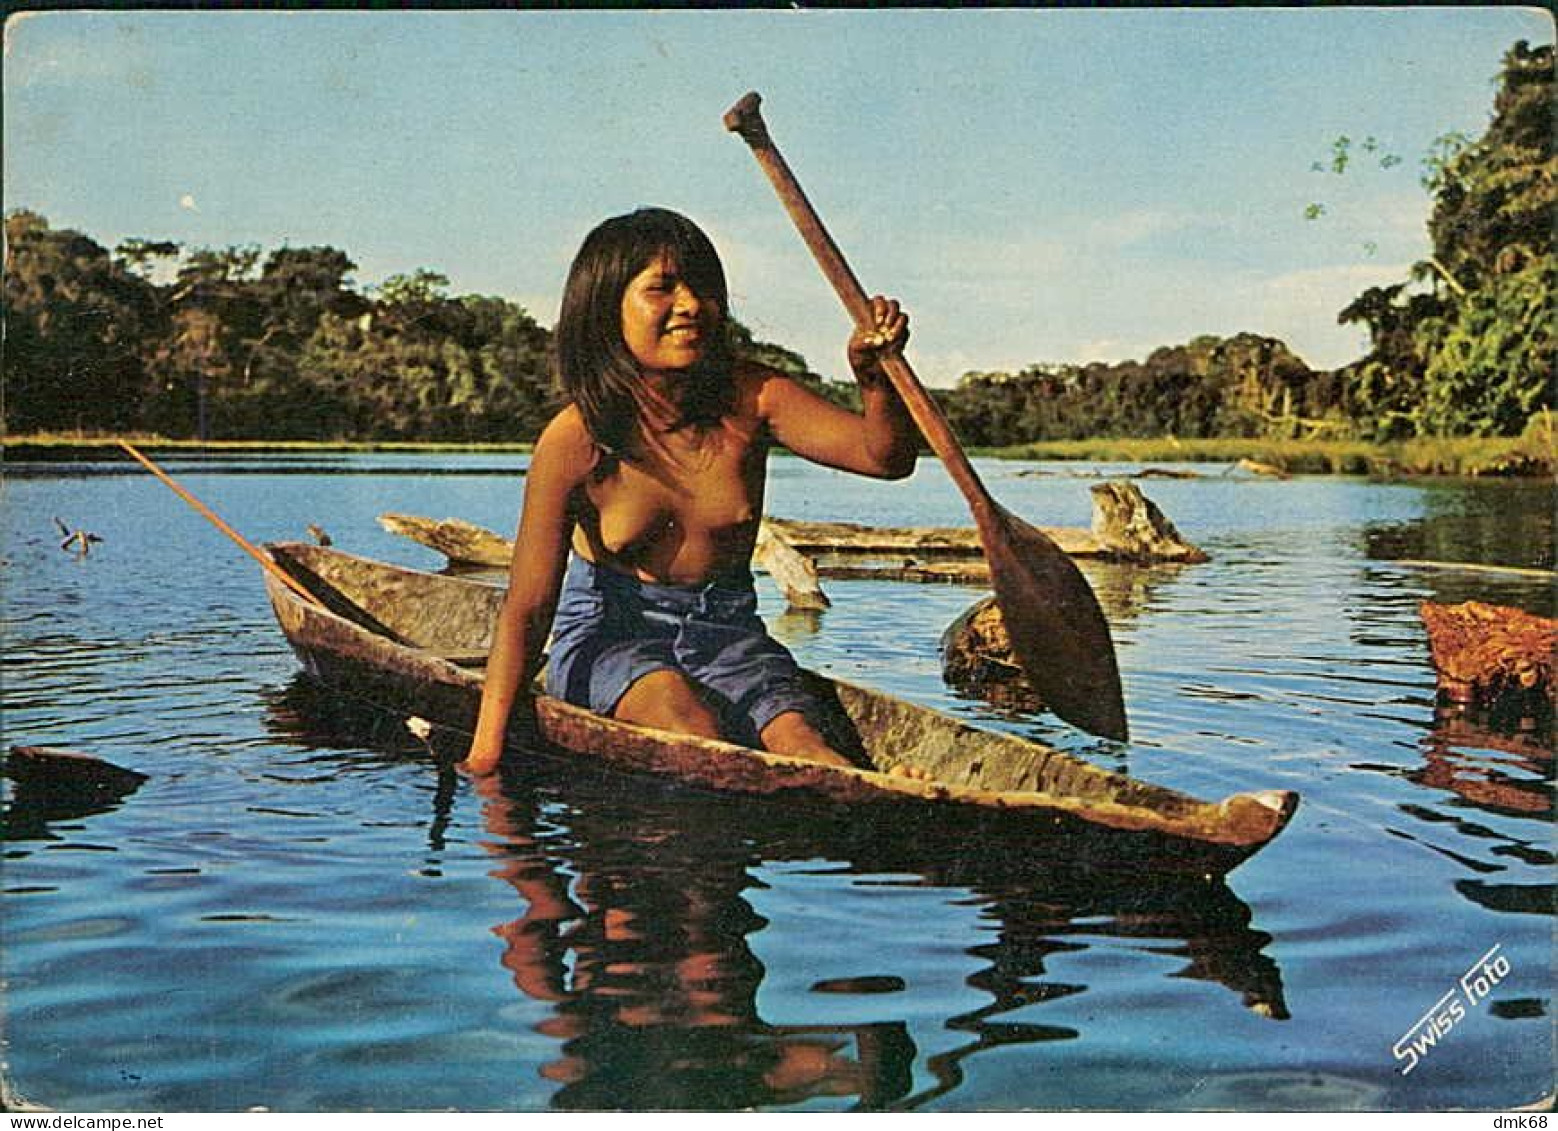 PERU - AMAZON JUNGLE - HALF NAKED / NUDE / NU JIBARO GIRL IN A CANOE - MAILED 1979 / RED POSTMARK (18045) - Amerika